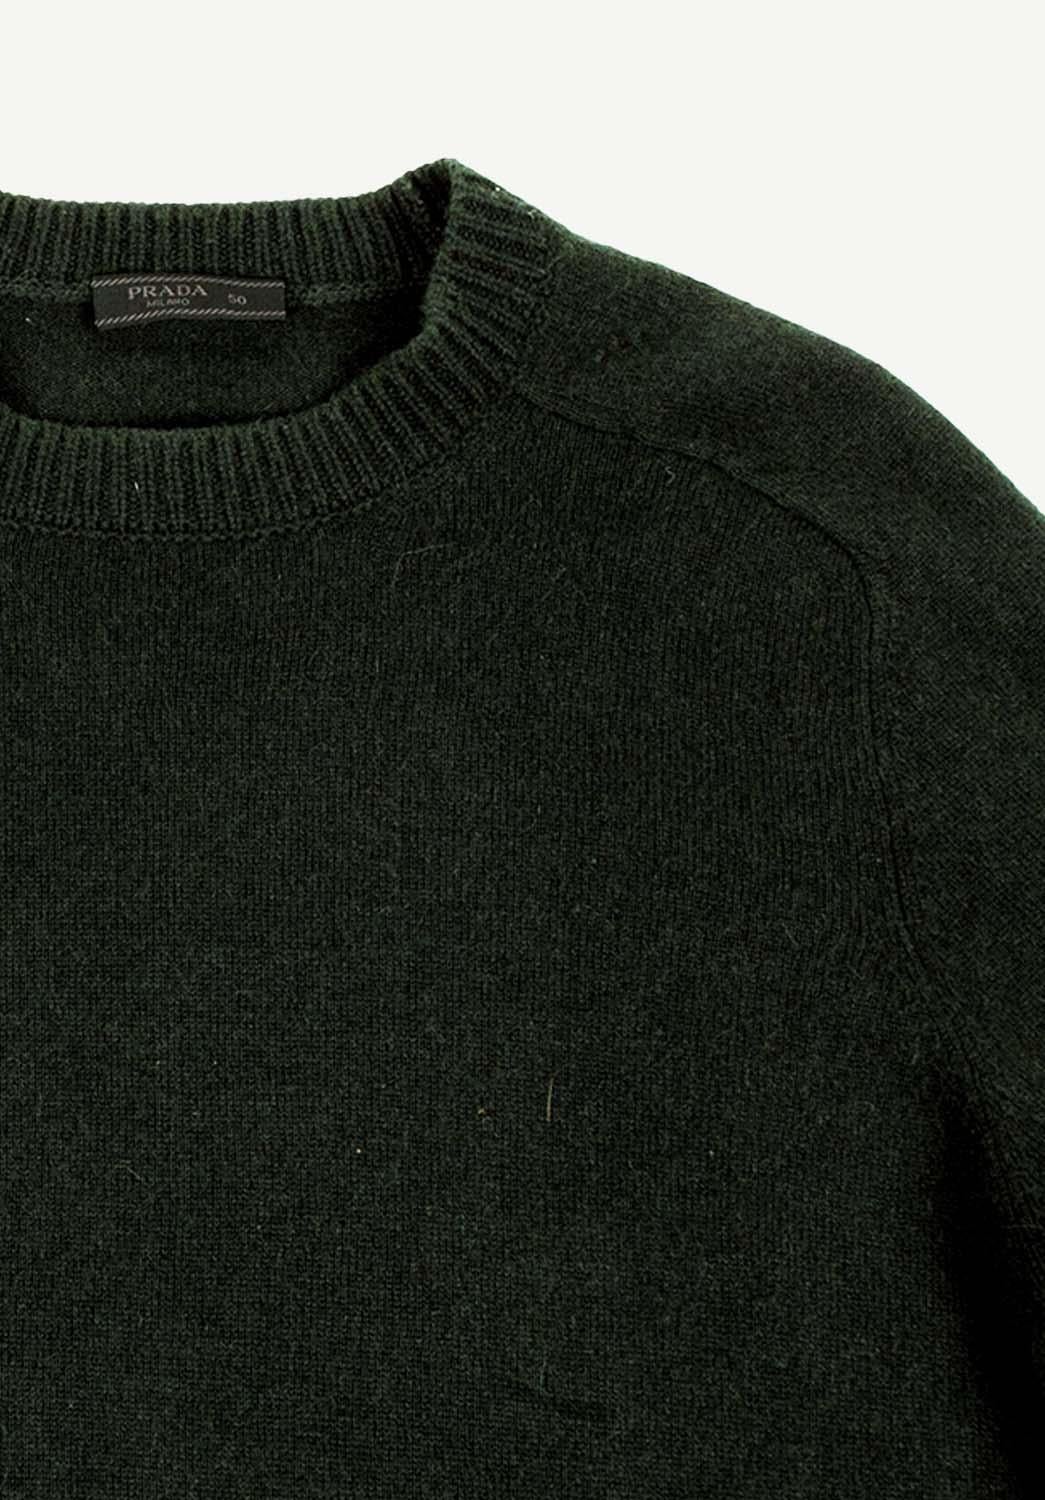 Black Prada Suede Elbows Men Cashmere Green Sweater Size 50IT Medium (S106)